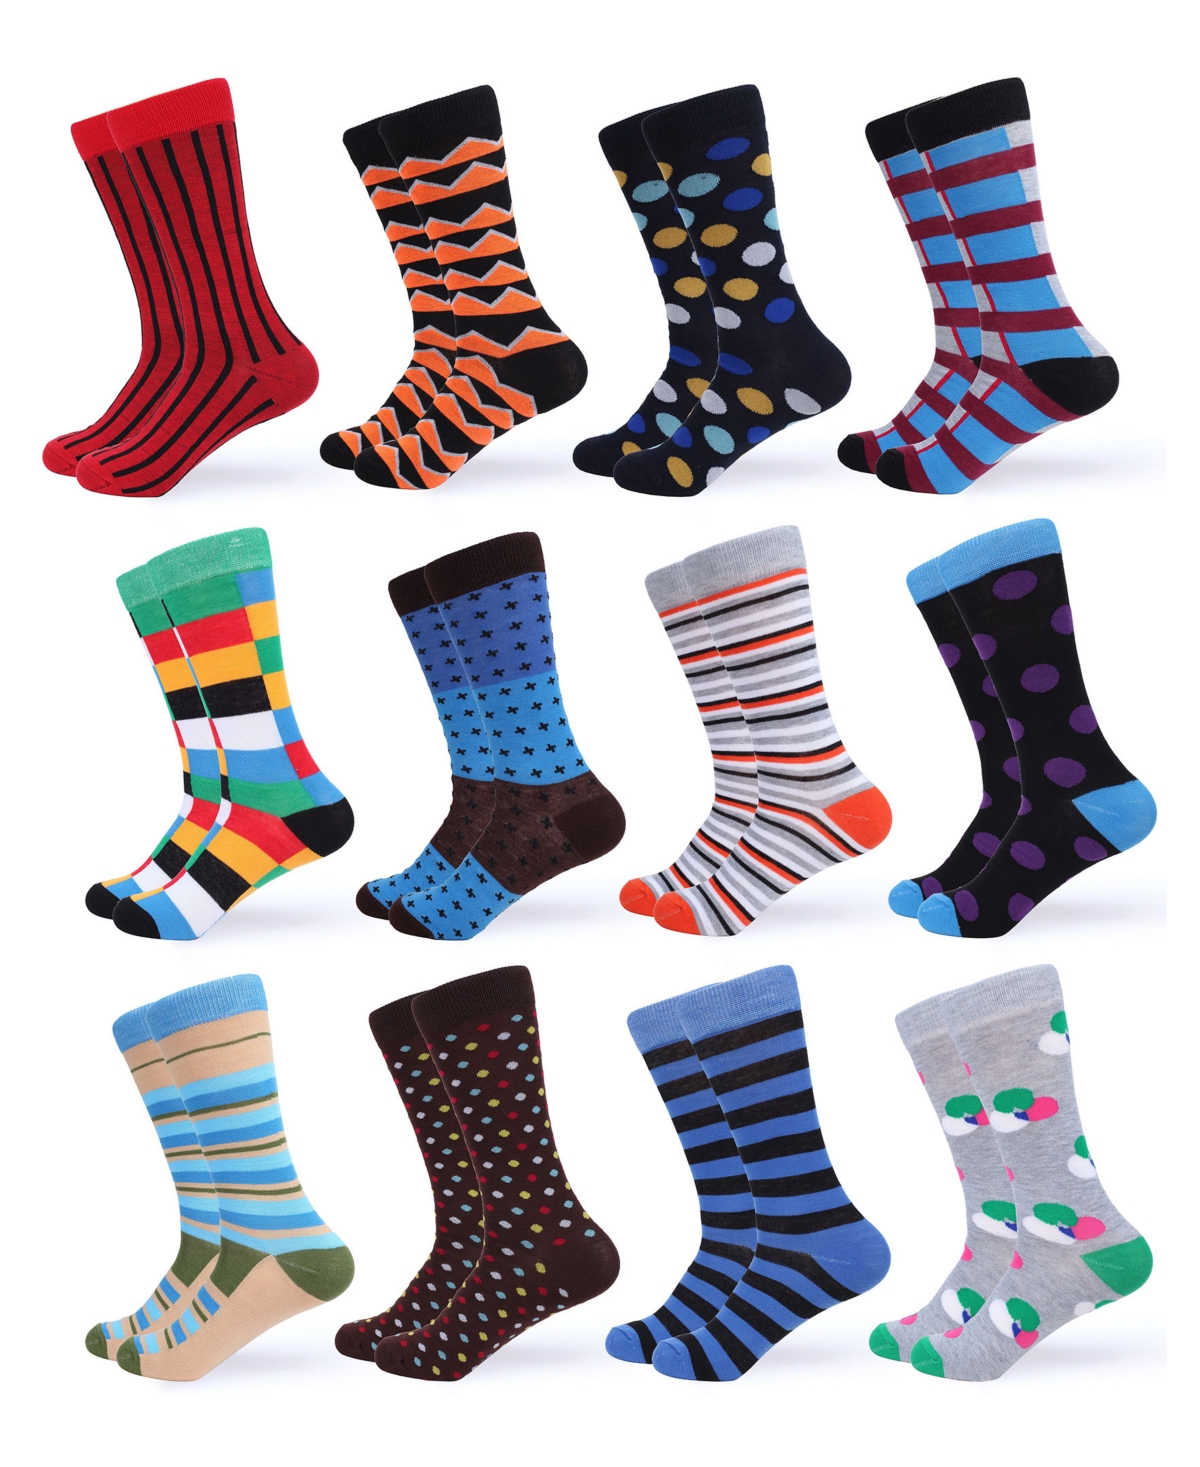 Gallery Seven Men's Funky Colorful Dress Socks Pack of 12